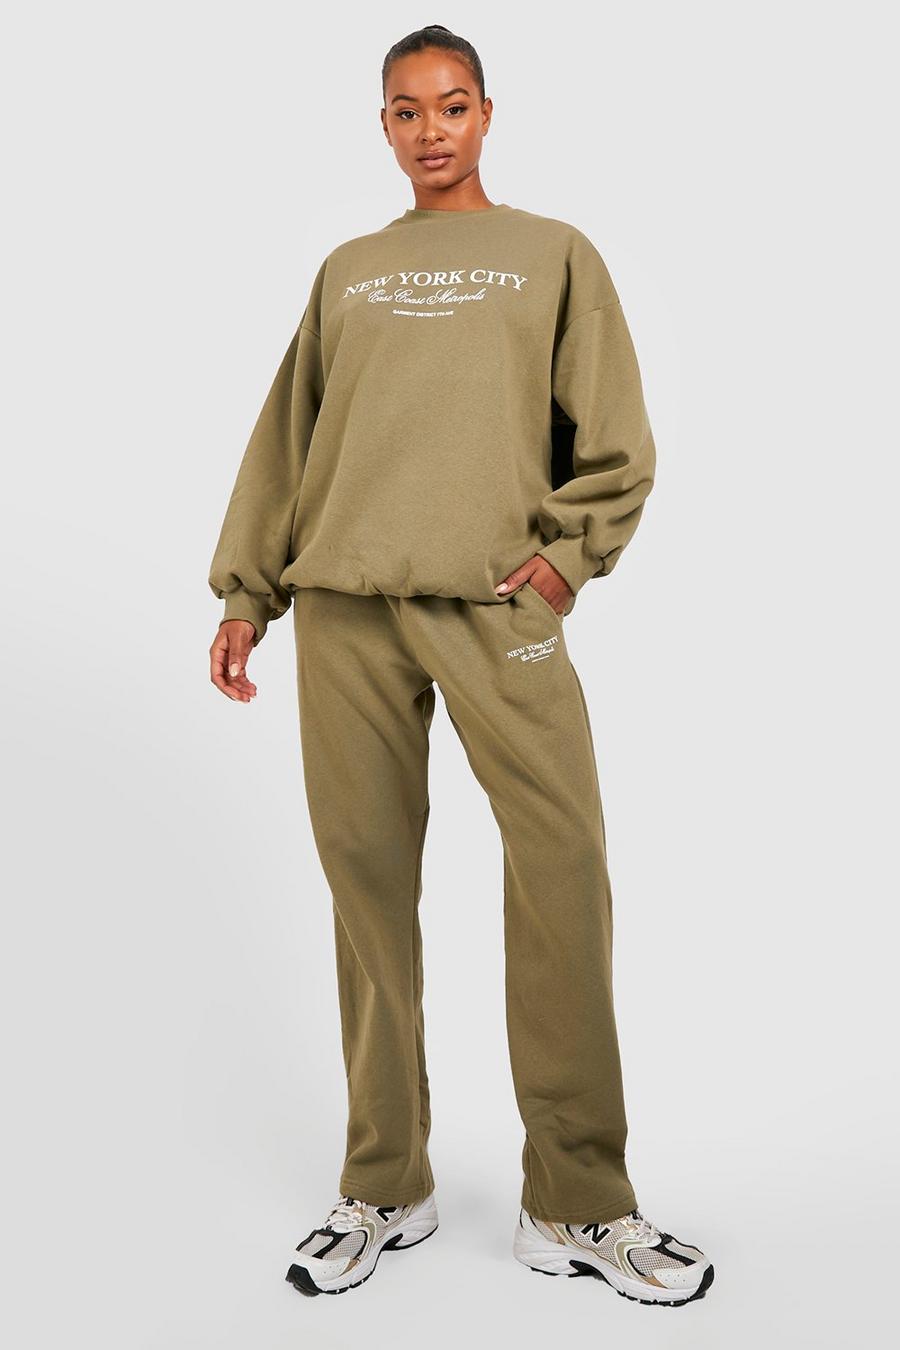 Khaki kaki Tall New York Printed Sweatshirt Tracksuit